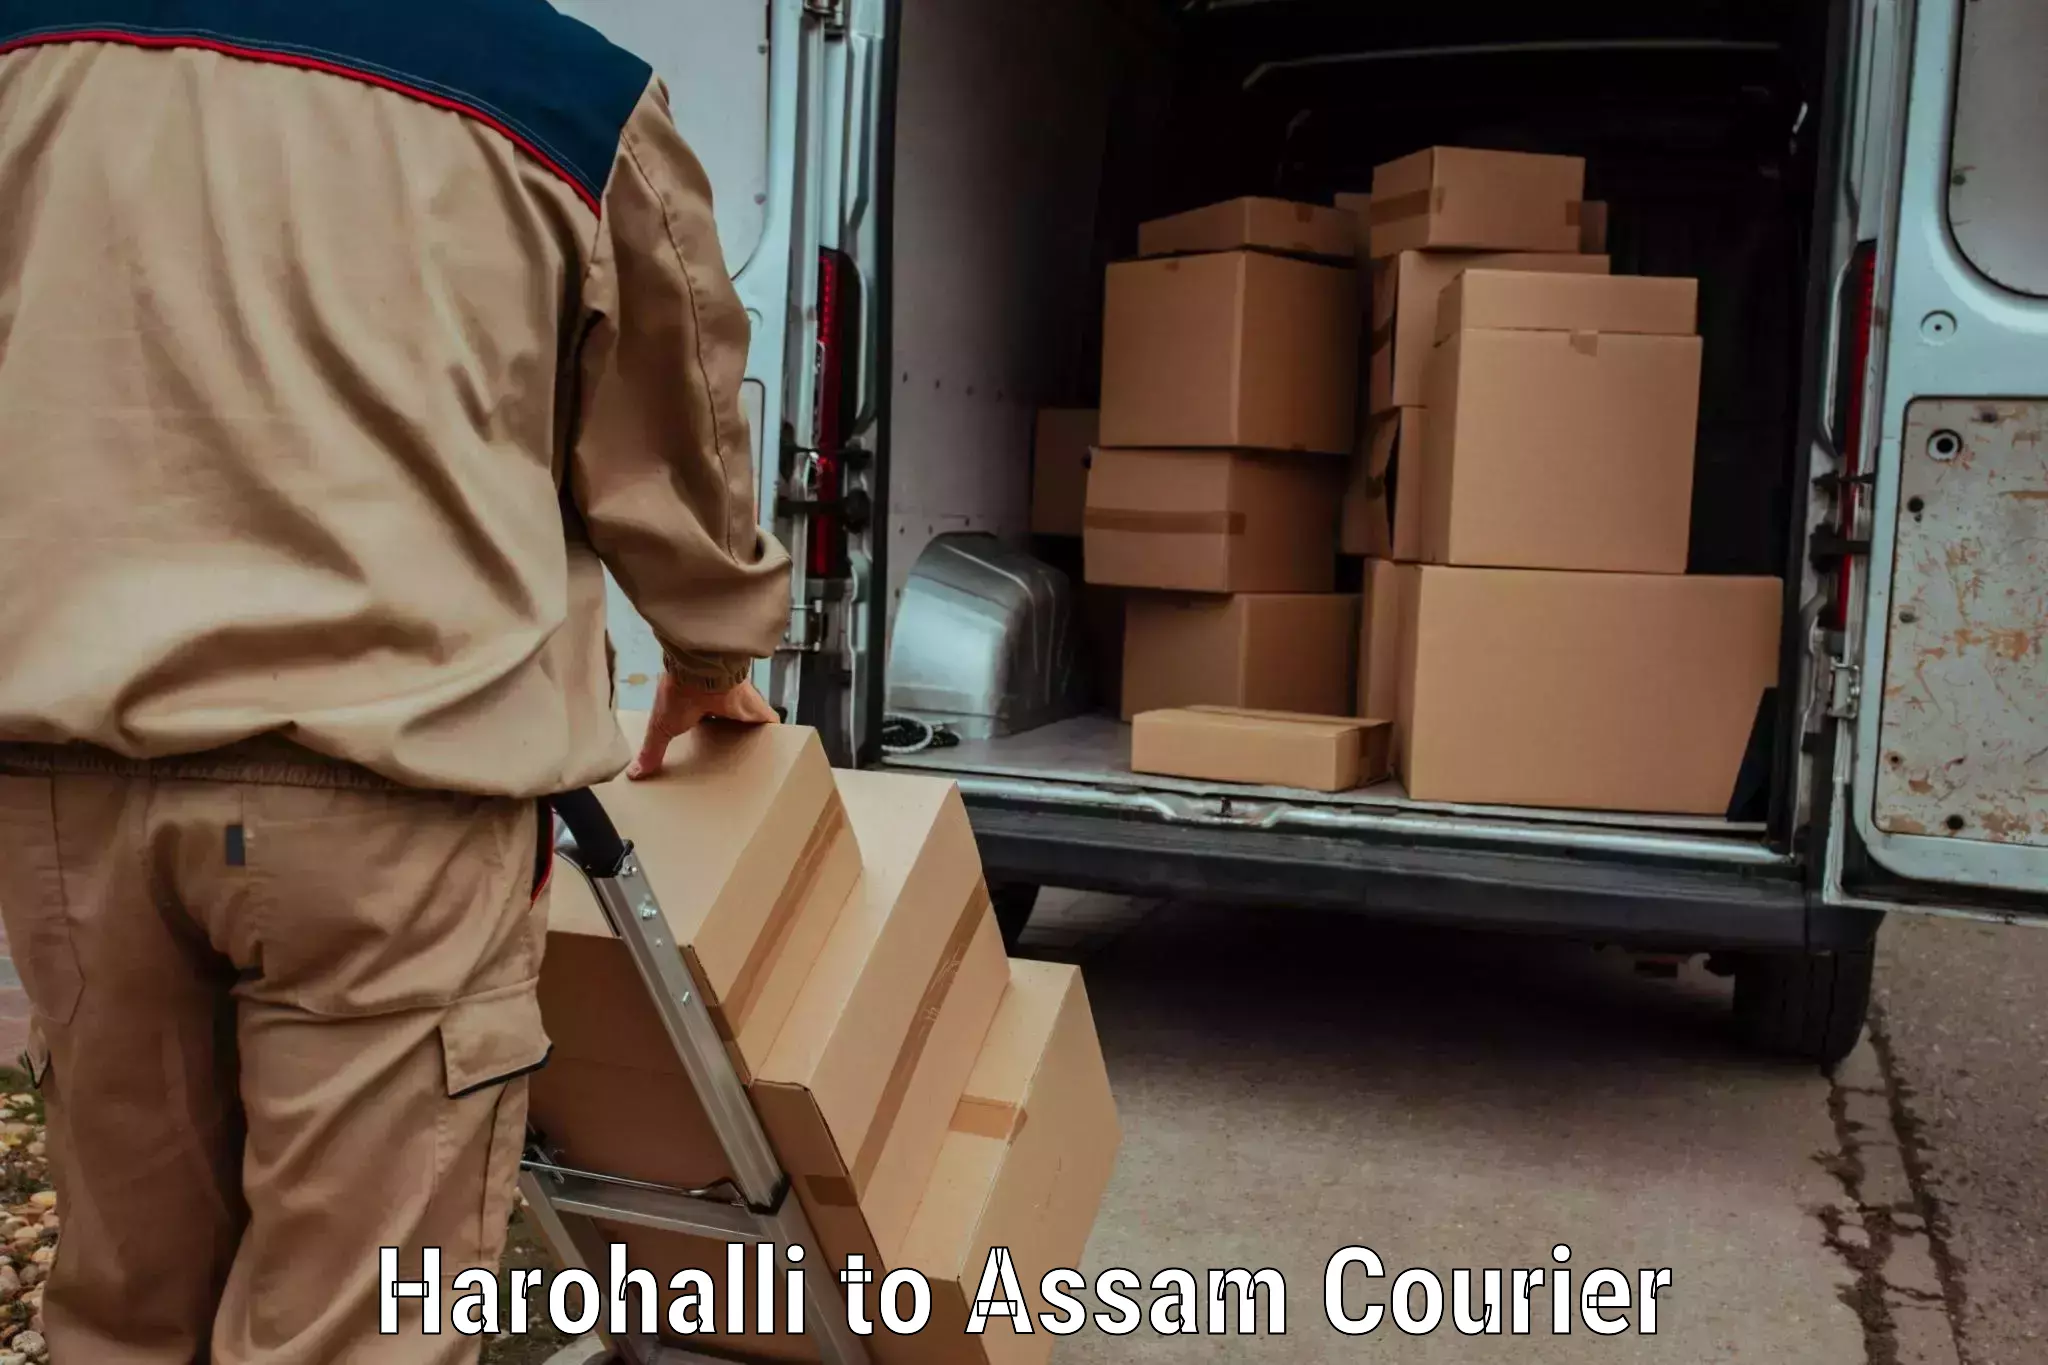 Courier service comparison Harohalli to Behali